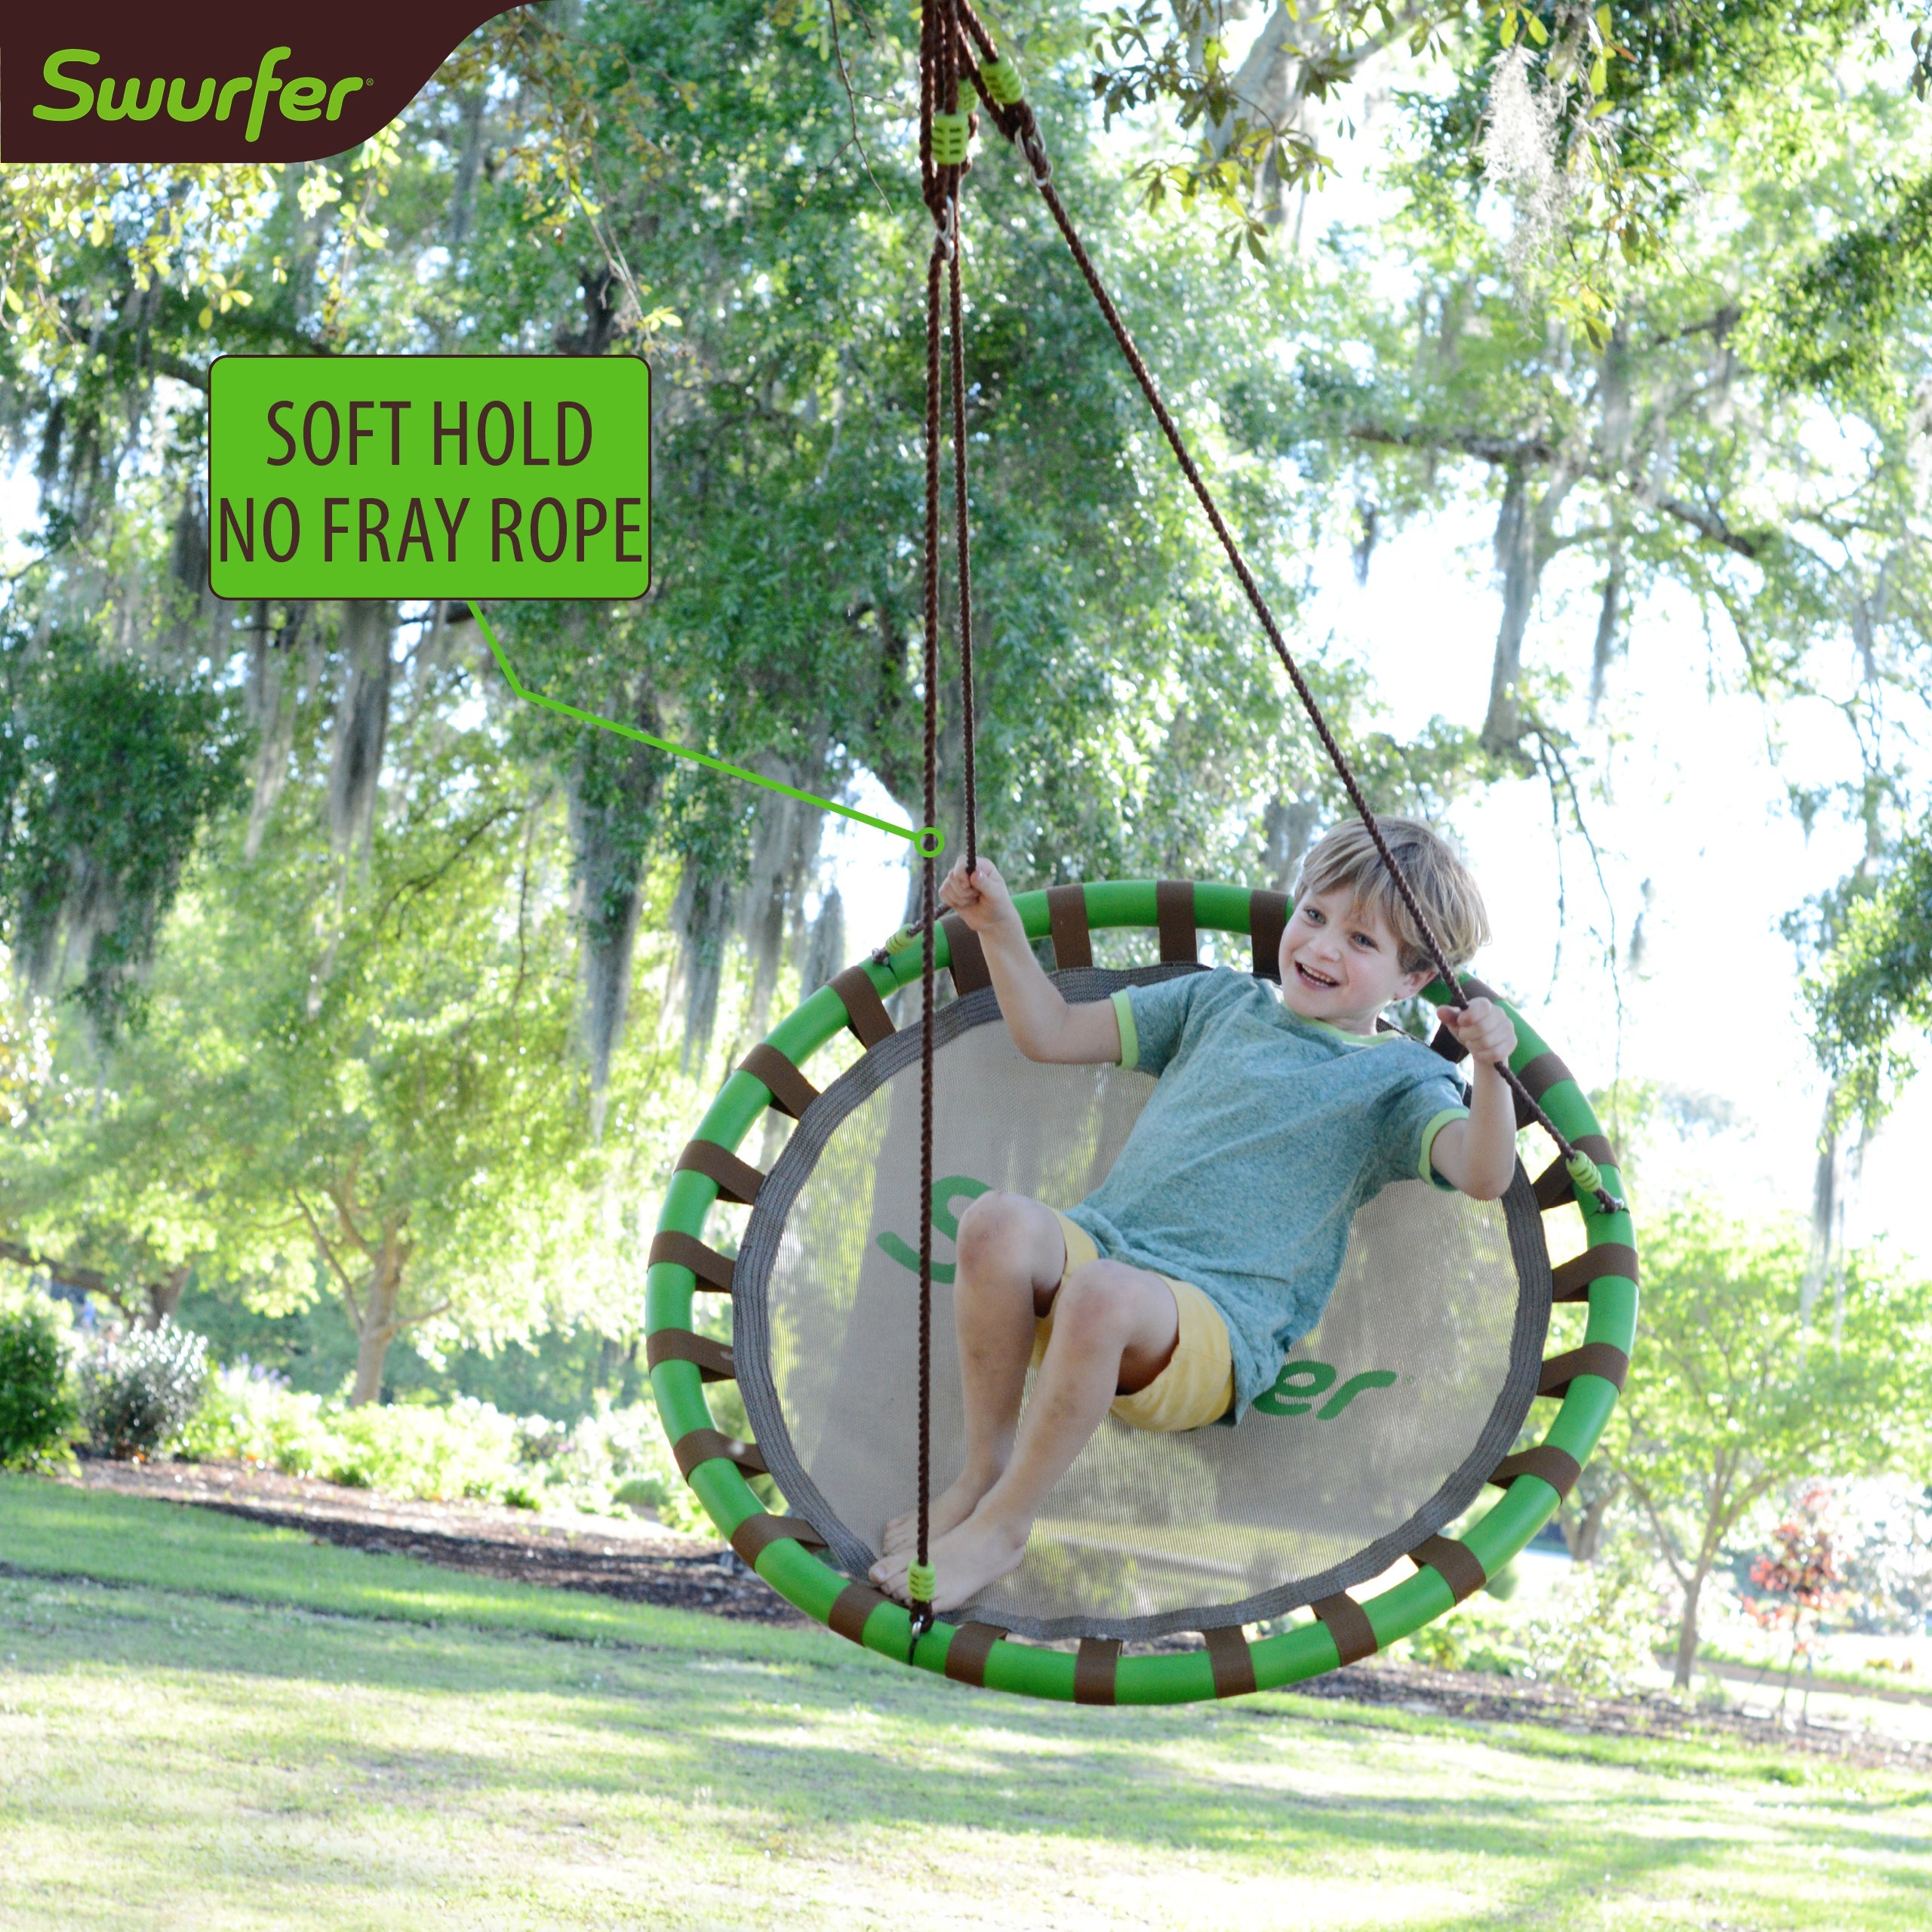 Swurfer 40 Orbit Trampoline Tree Swing, Holds up to 4 Kids